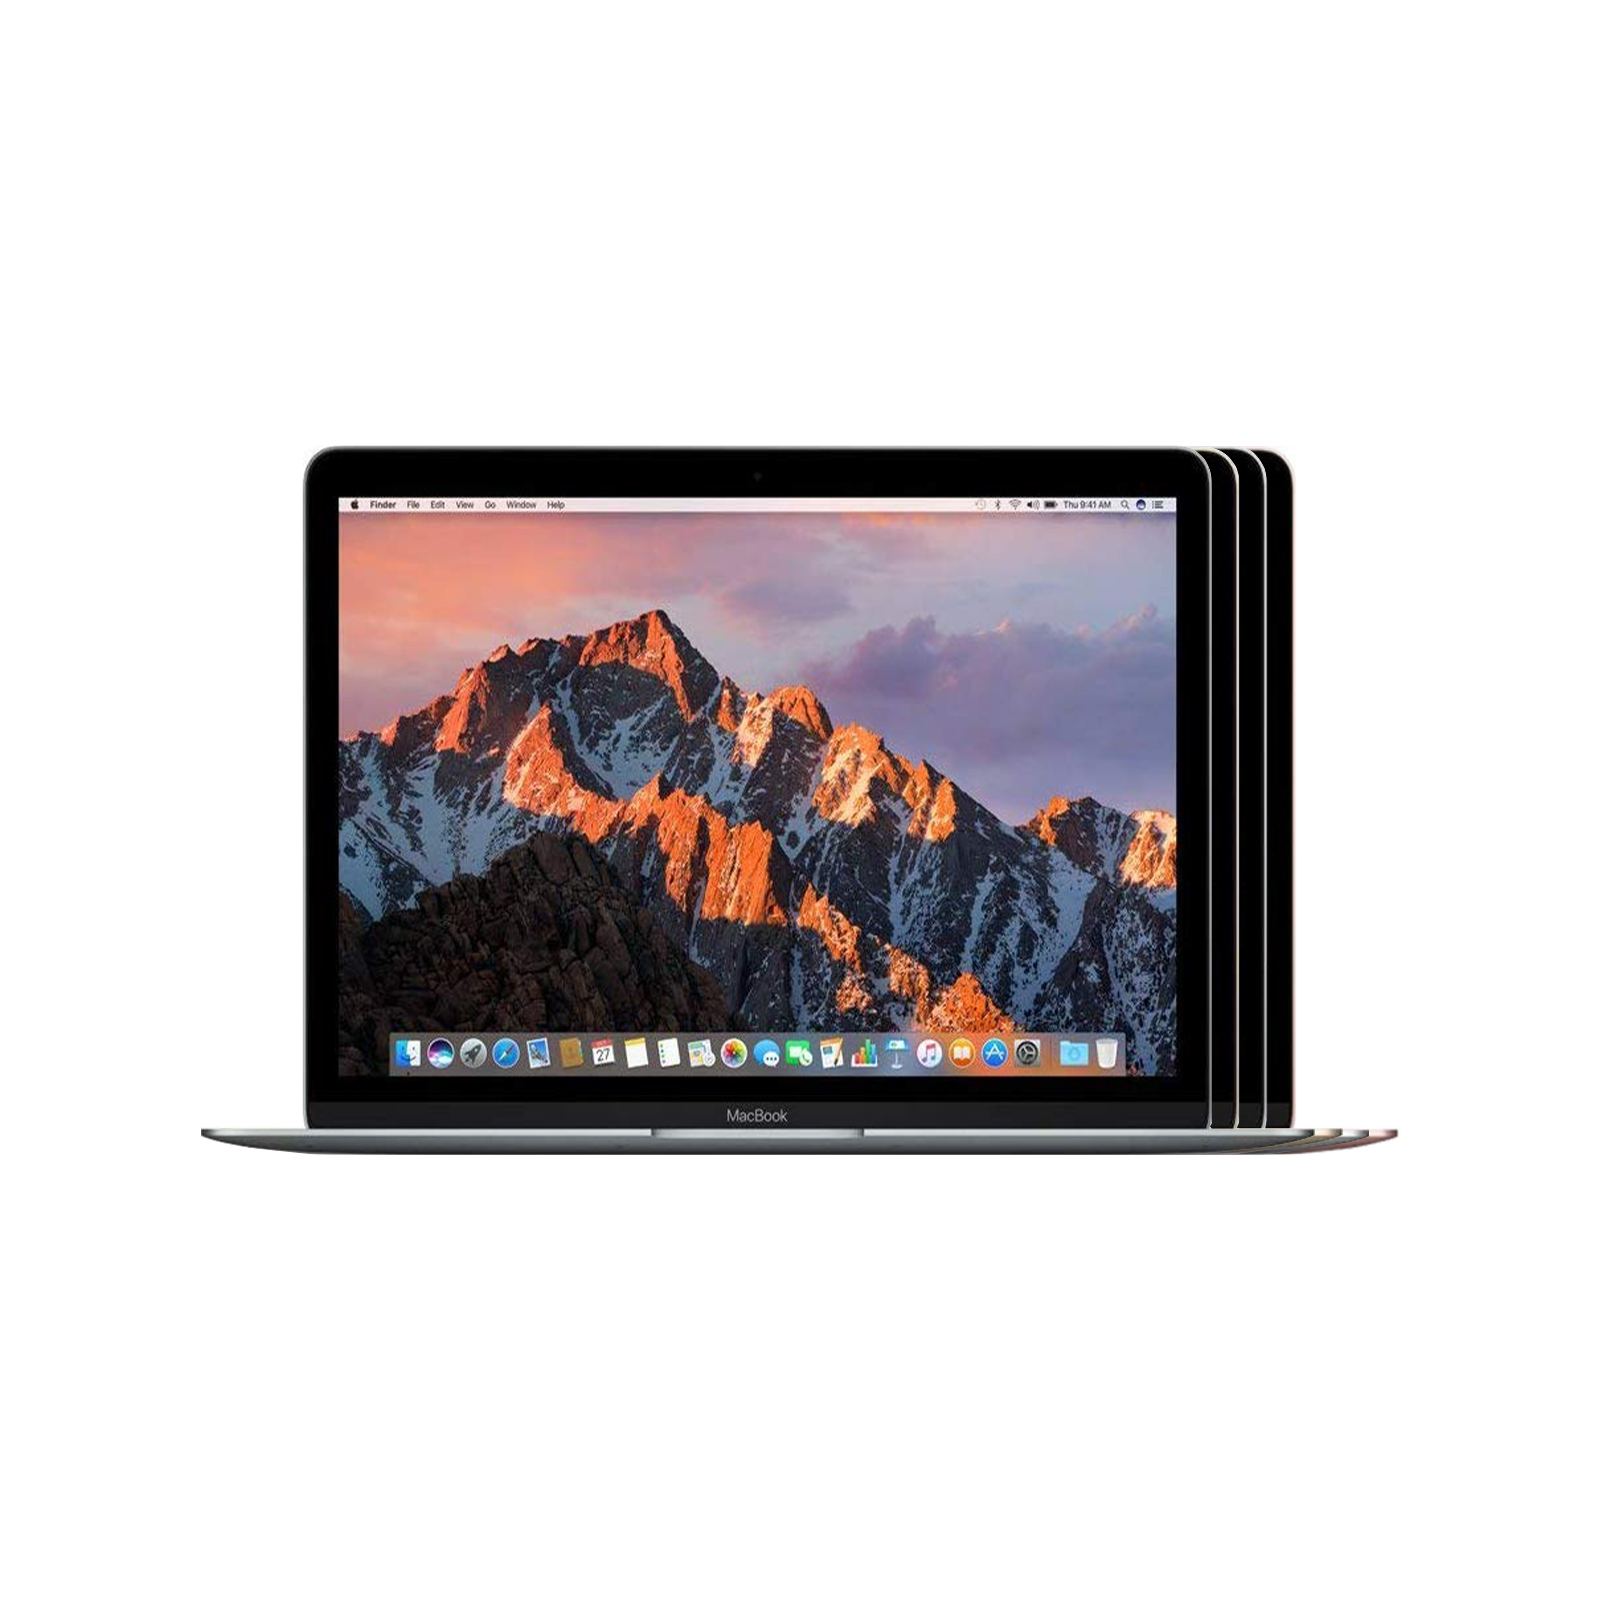 MacBook (Retina, 12-inch, 2017) Intel Core i5 1.3 GHz 8GB 256GB